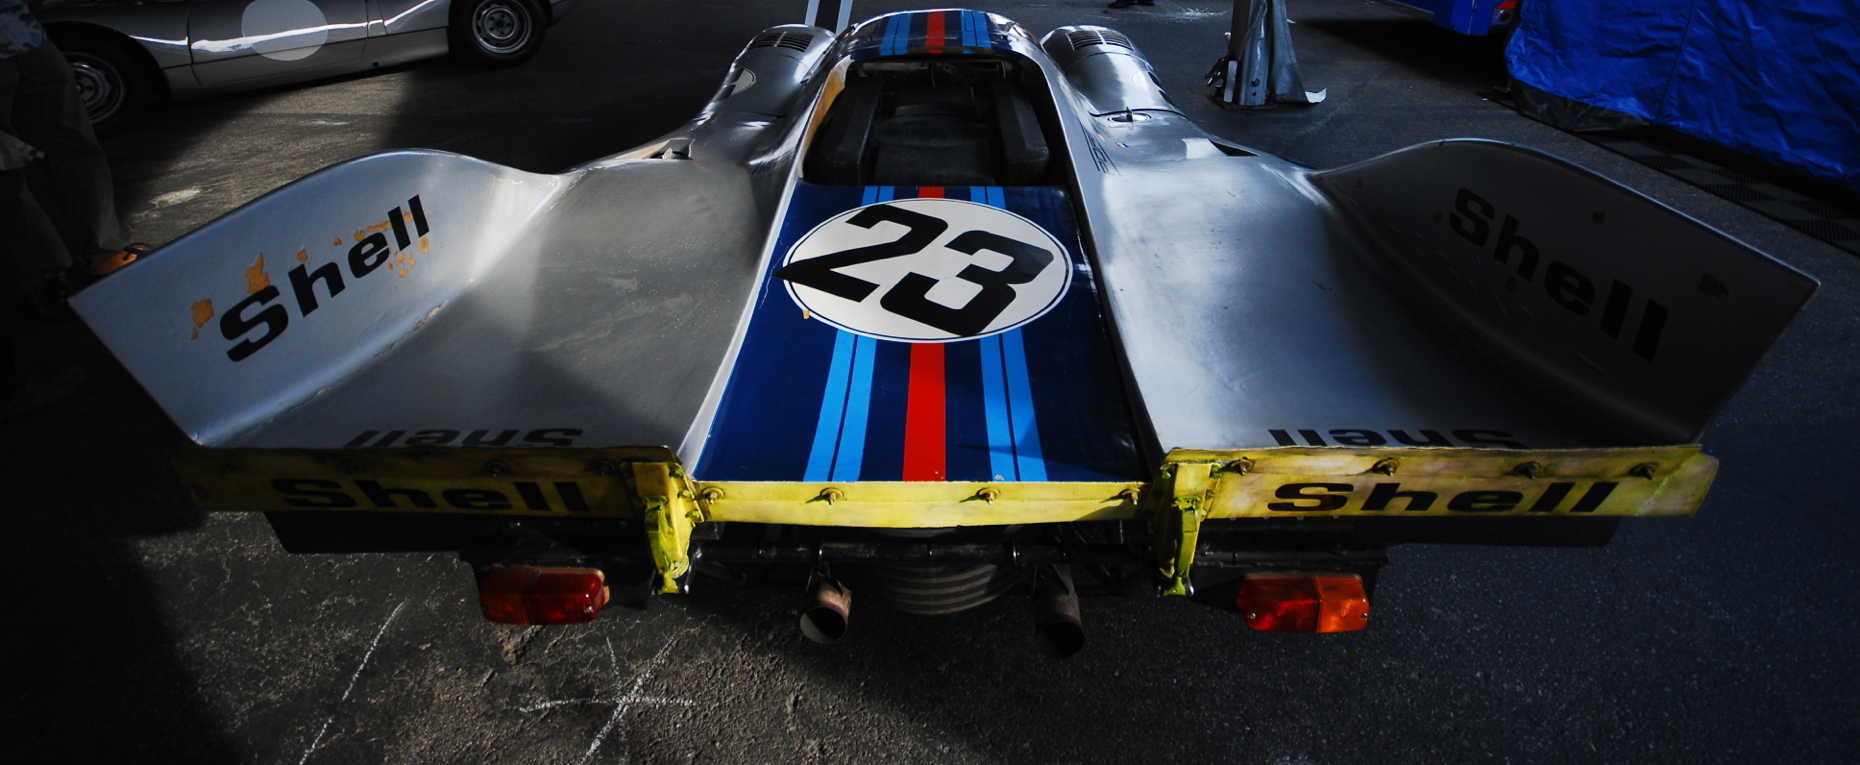 917 Tails.jpg